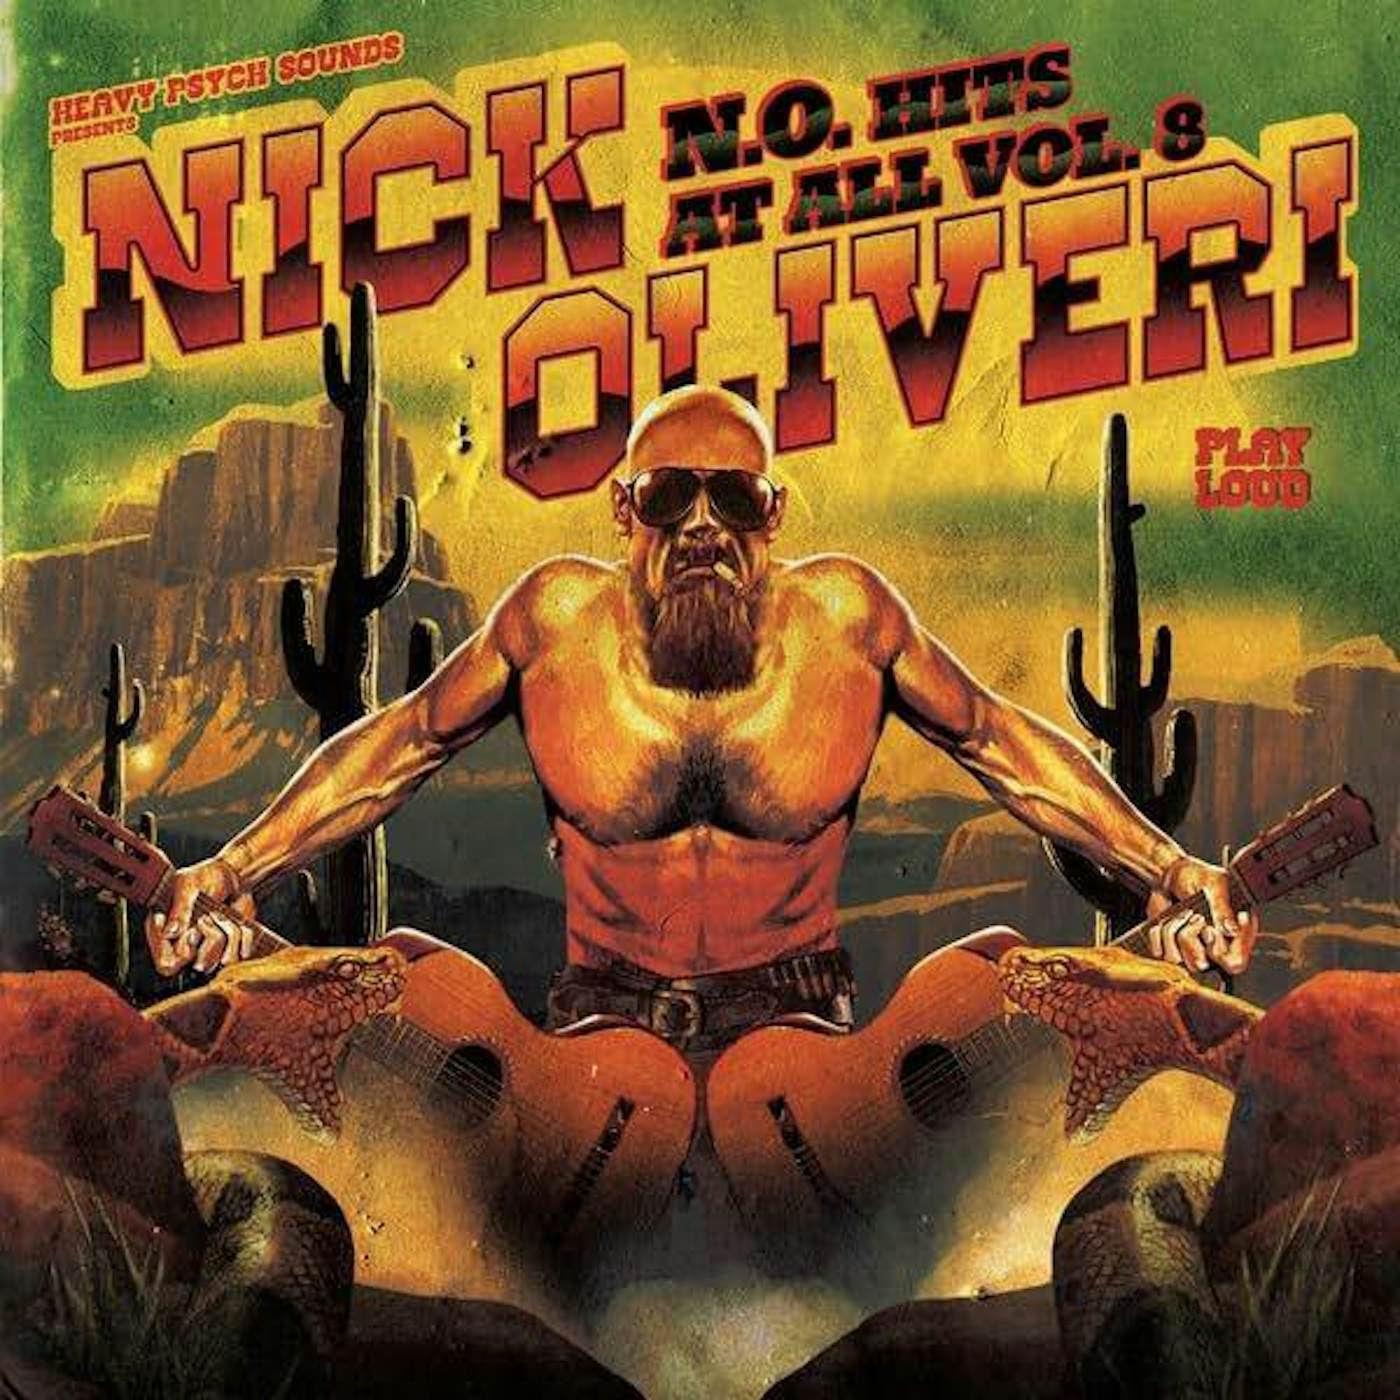 Nick Oliveri N.O. Hits At All Vol. 8 Vinyl Record